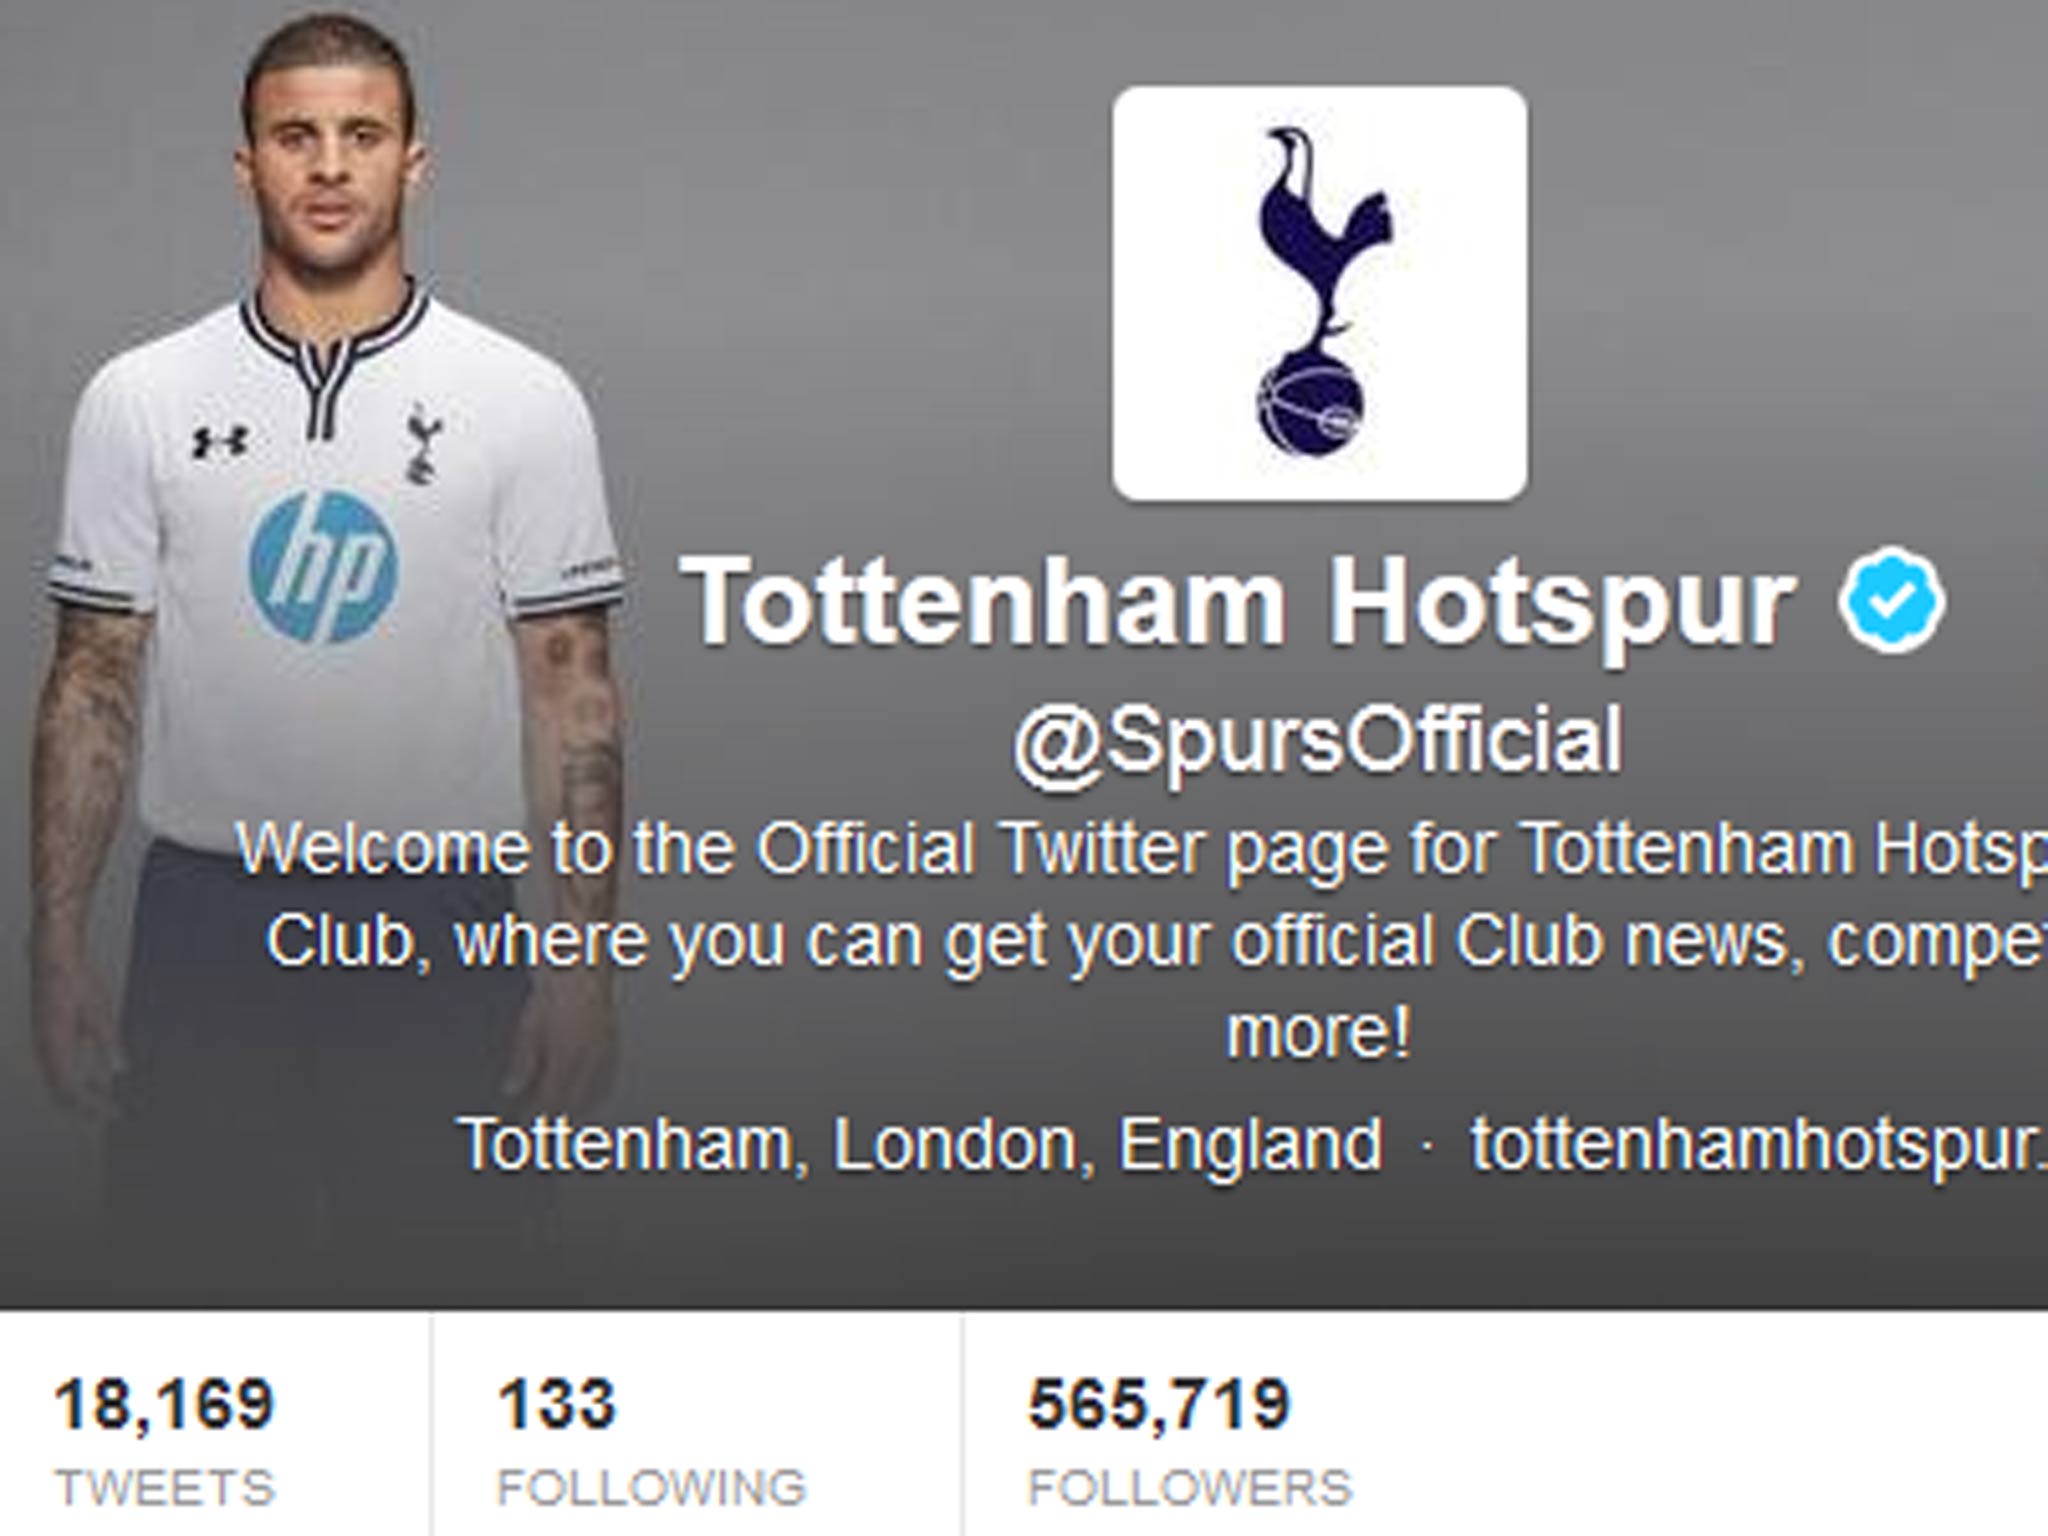 Tottenham's Twitter page